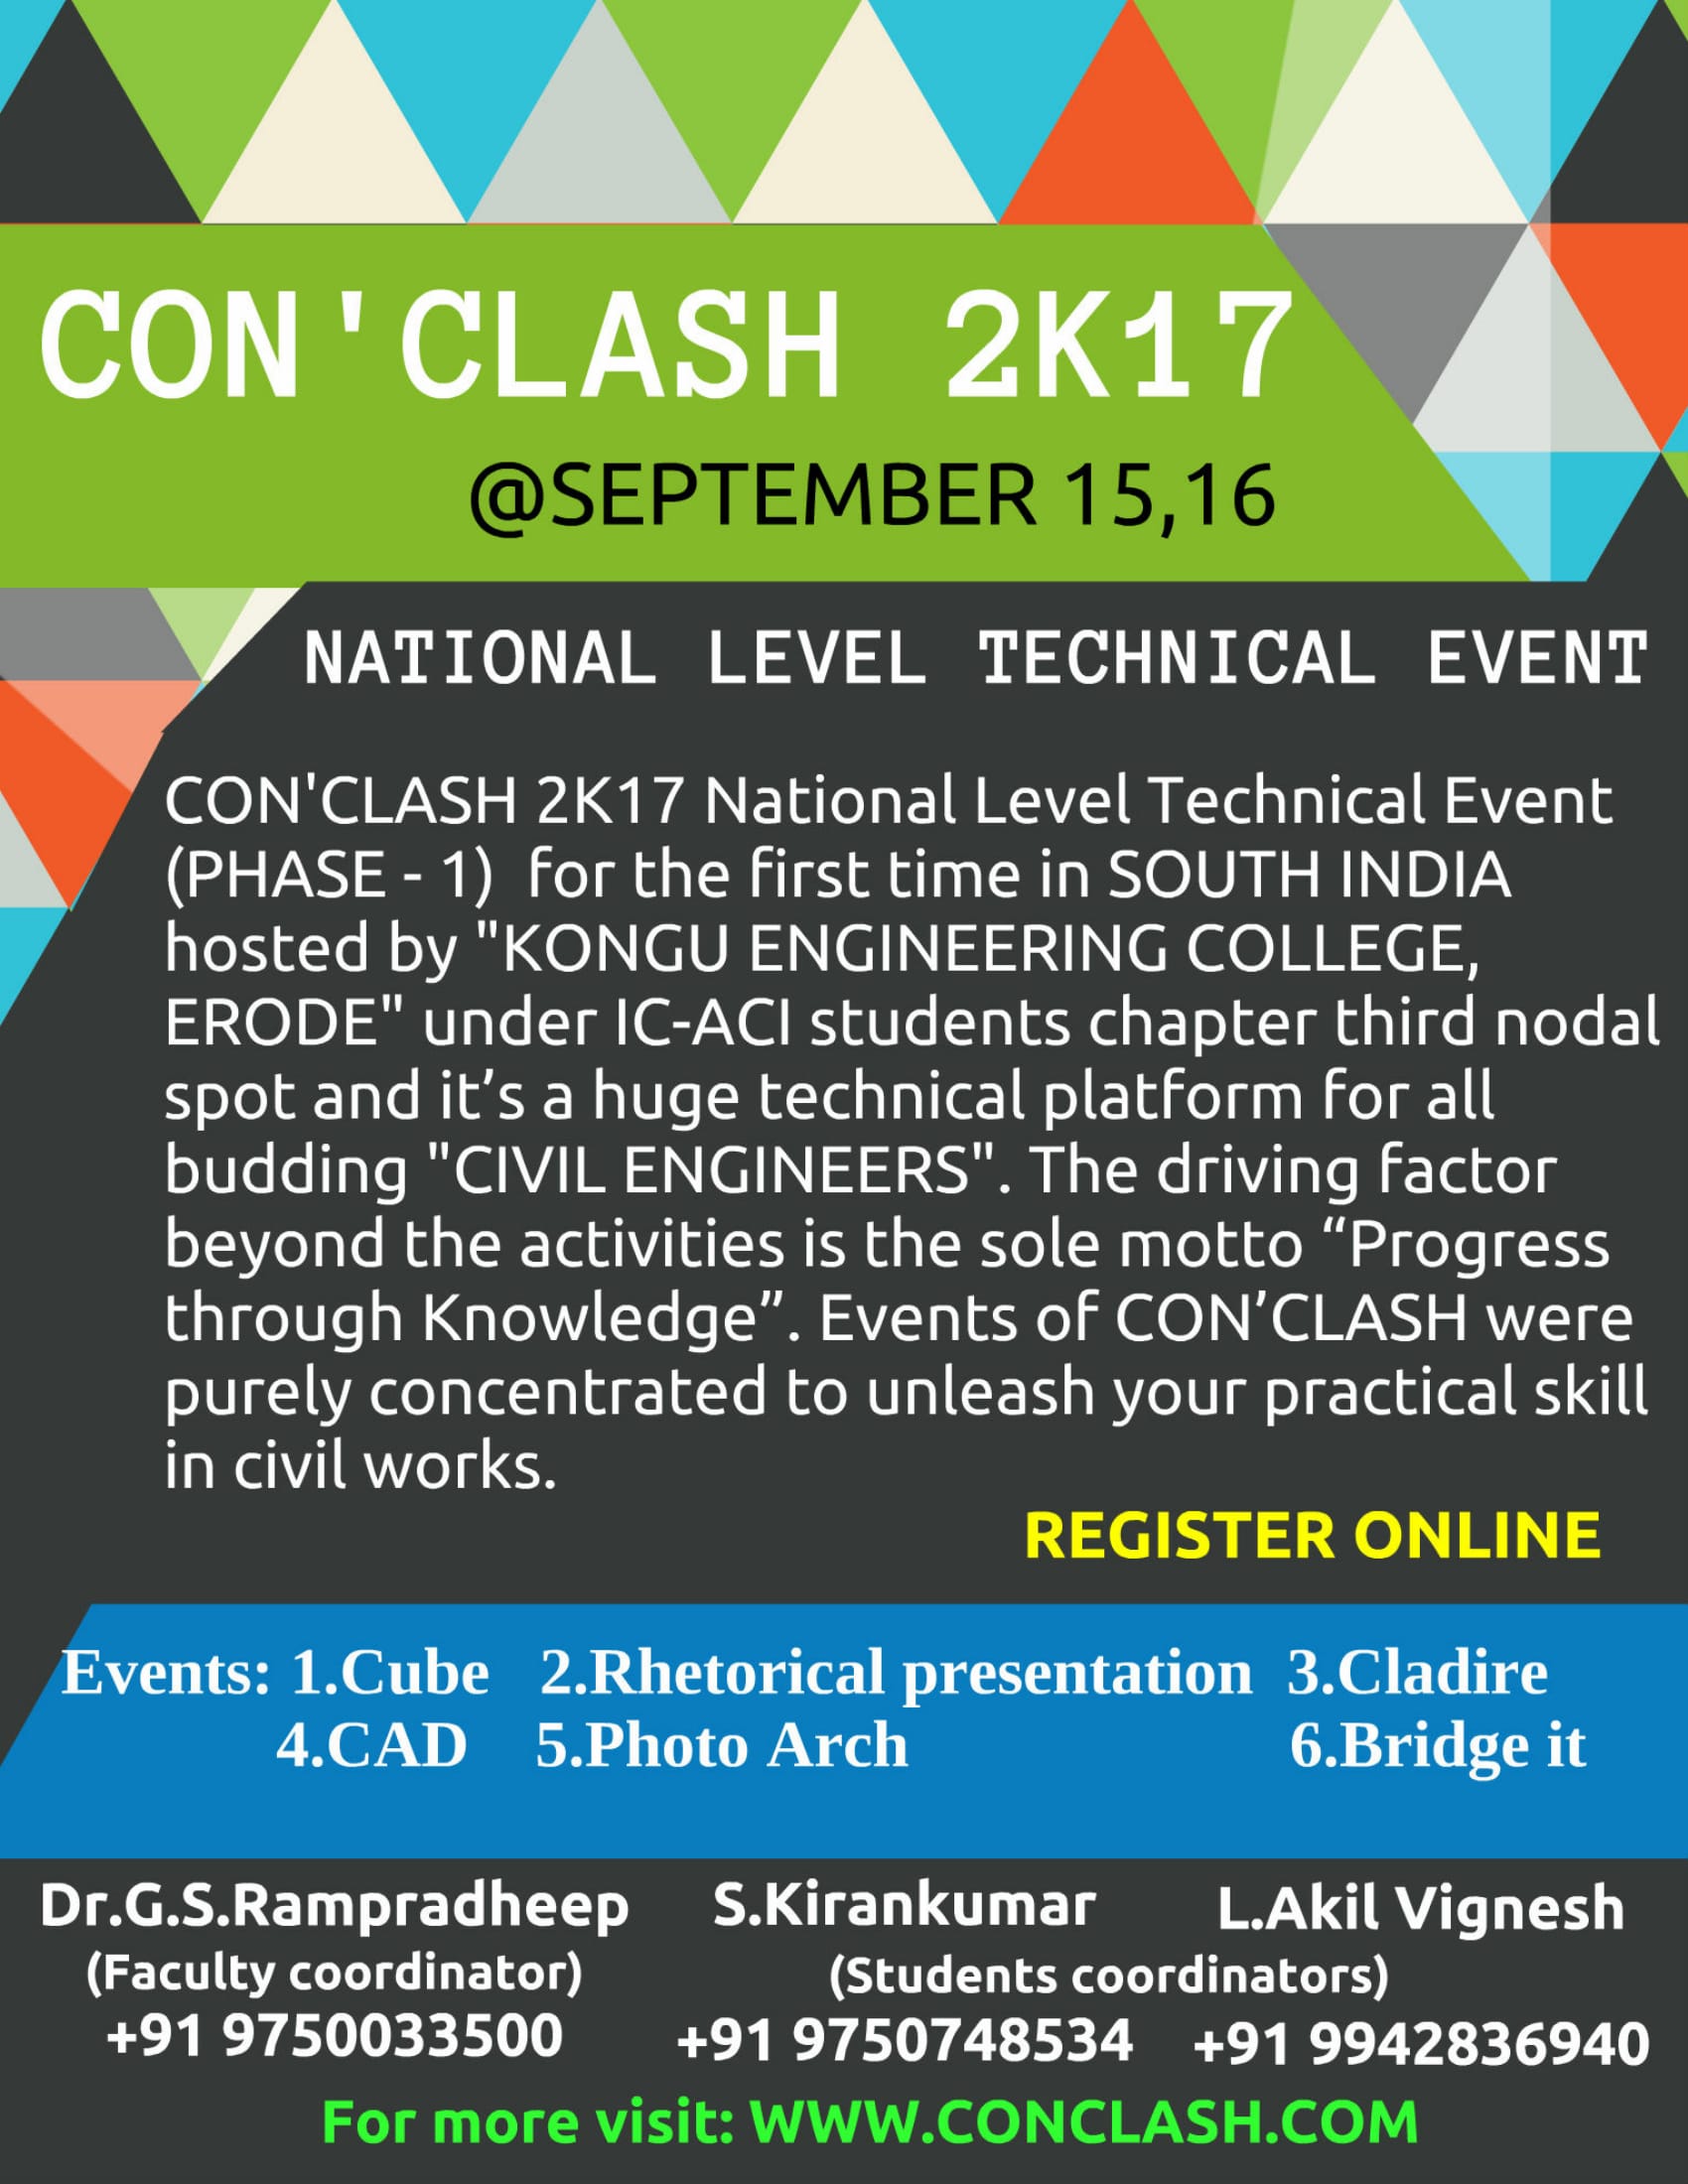 ConClash 2017